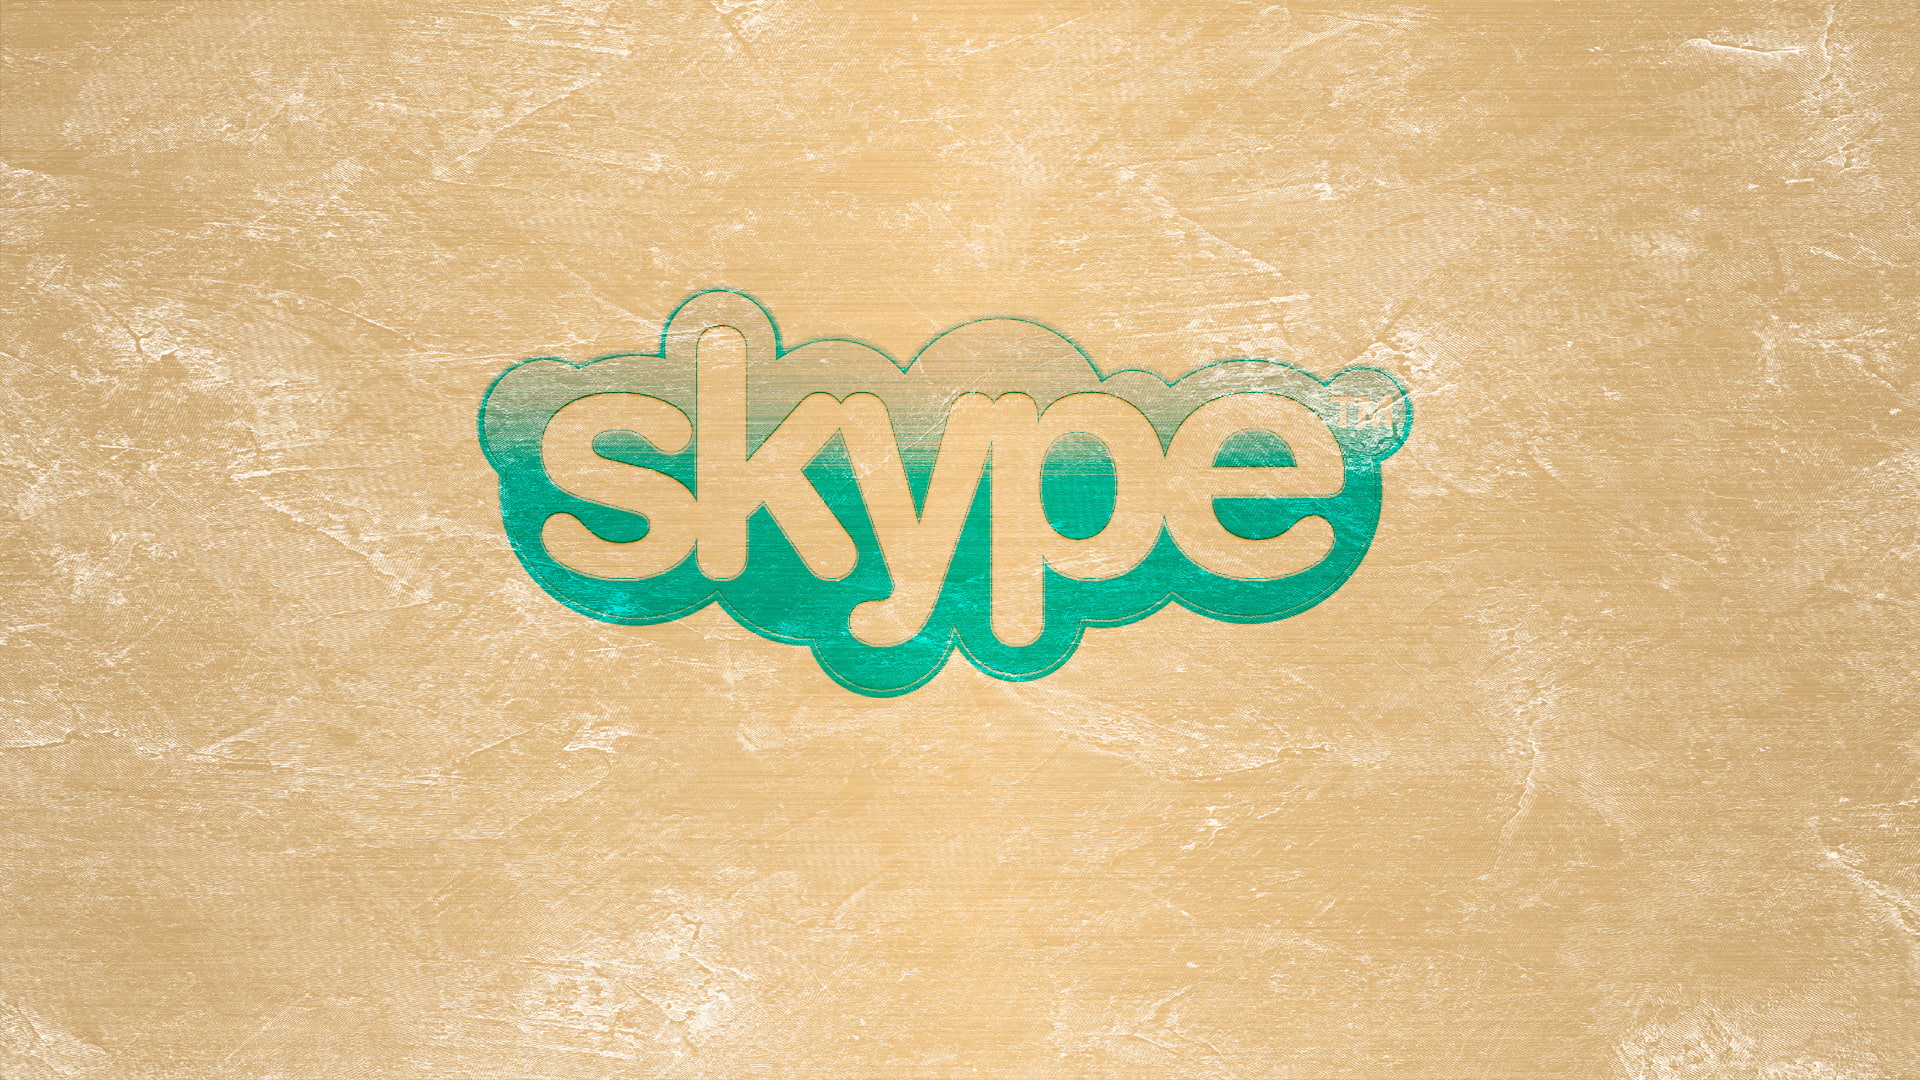 Technology, Skype